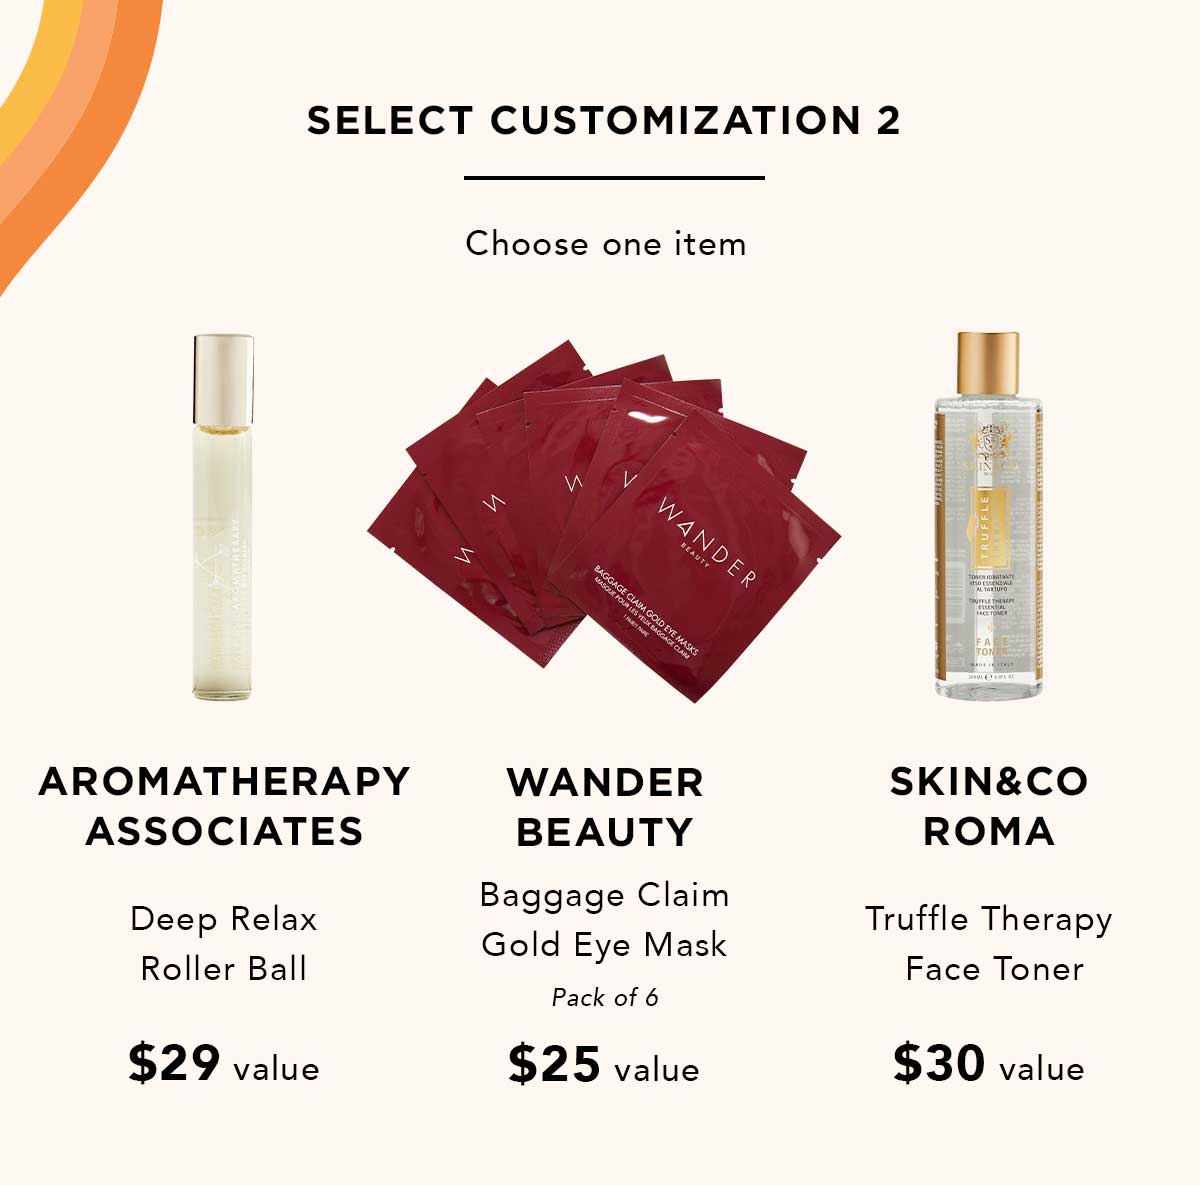 Select Customization 2 | Aromatherapy Associates, Wander Beauty, or SKIN&CO Roma